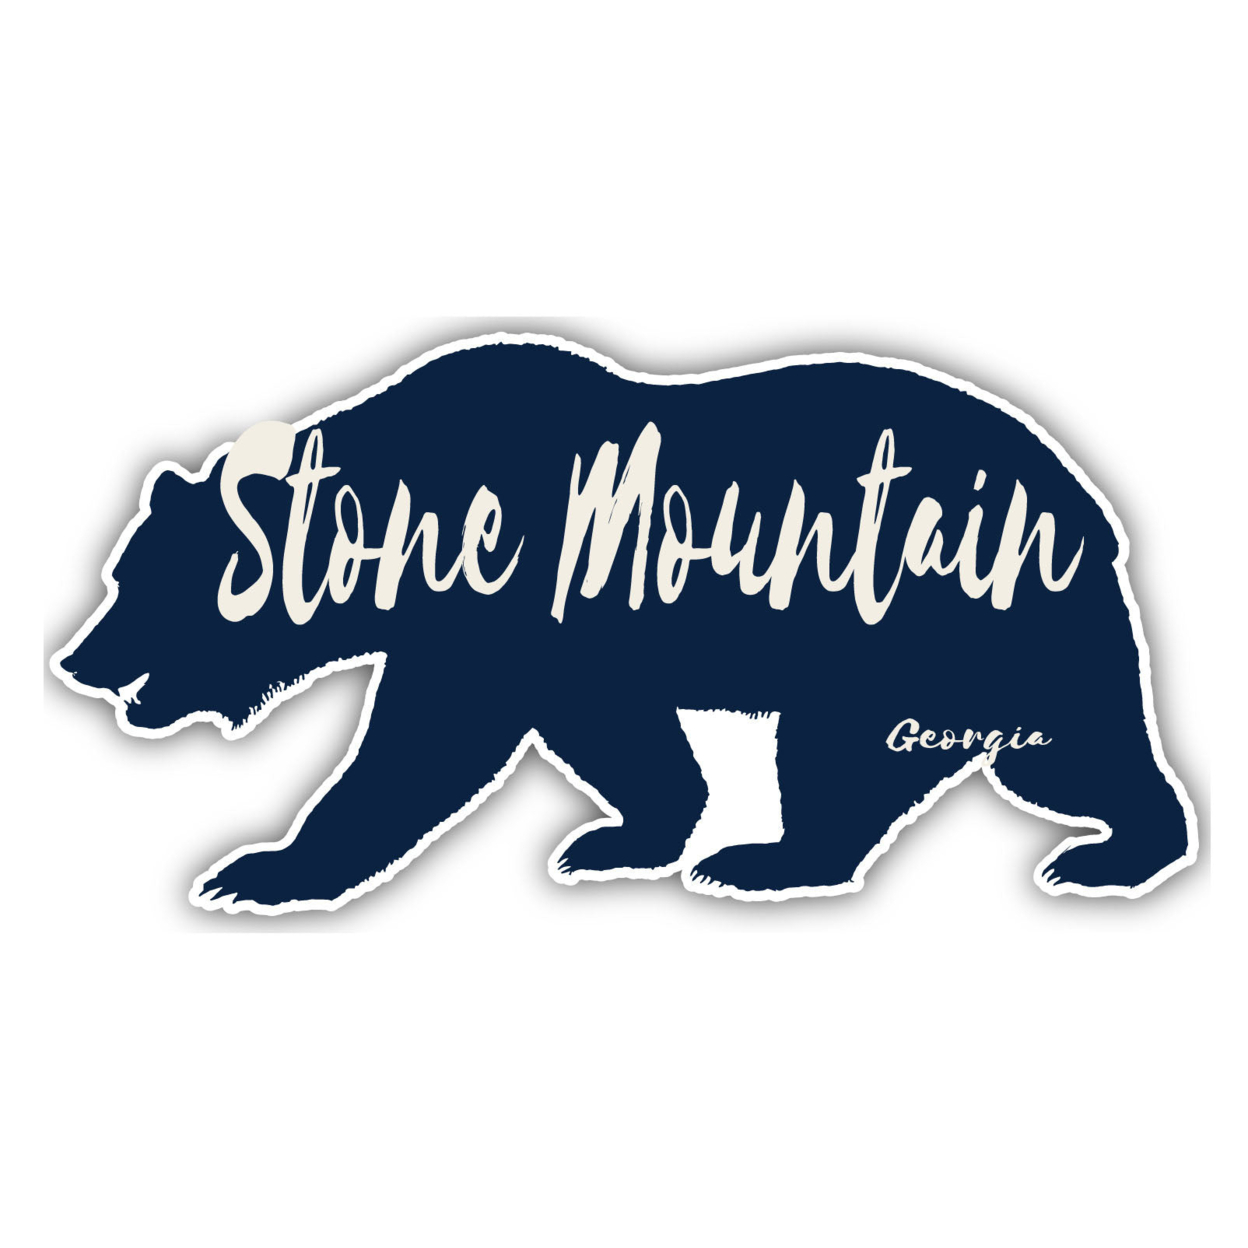 Stone Mountain Georgia Souvenir Decorative Stickers (Choose Theme And Size) - Single Unit, 2-Inch, Camp Life